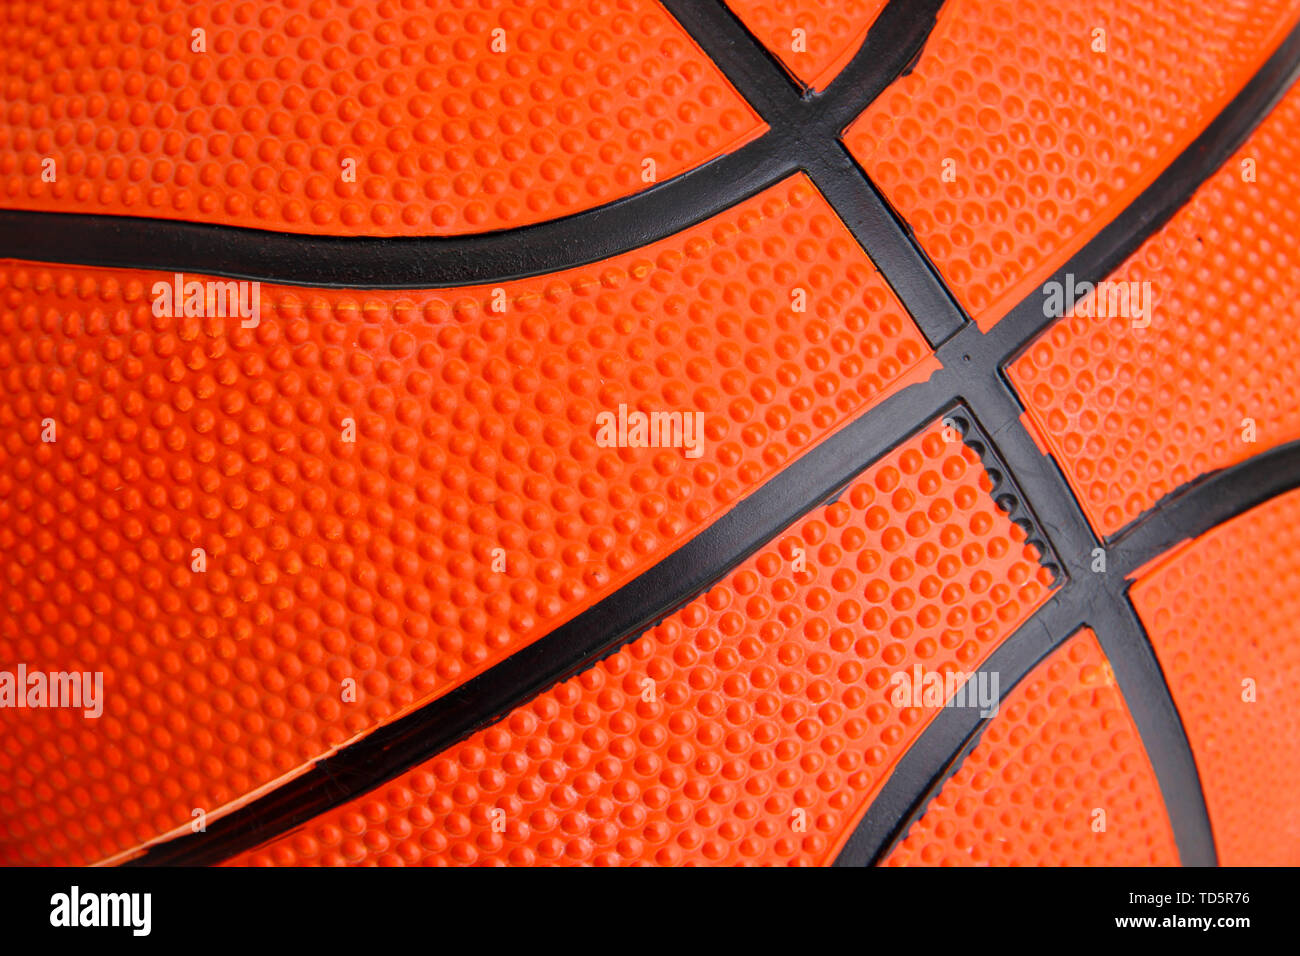 Basketball, close up Stock Photo